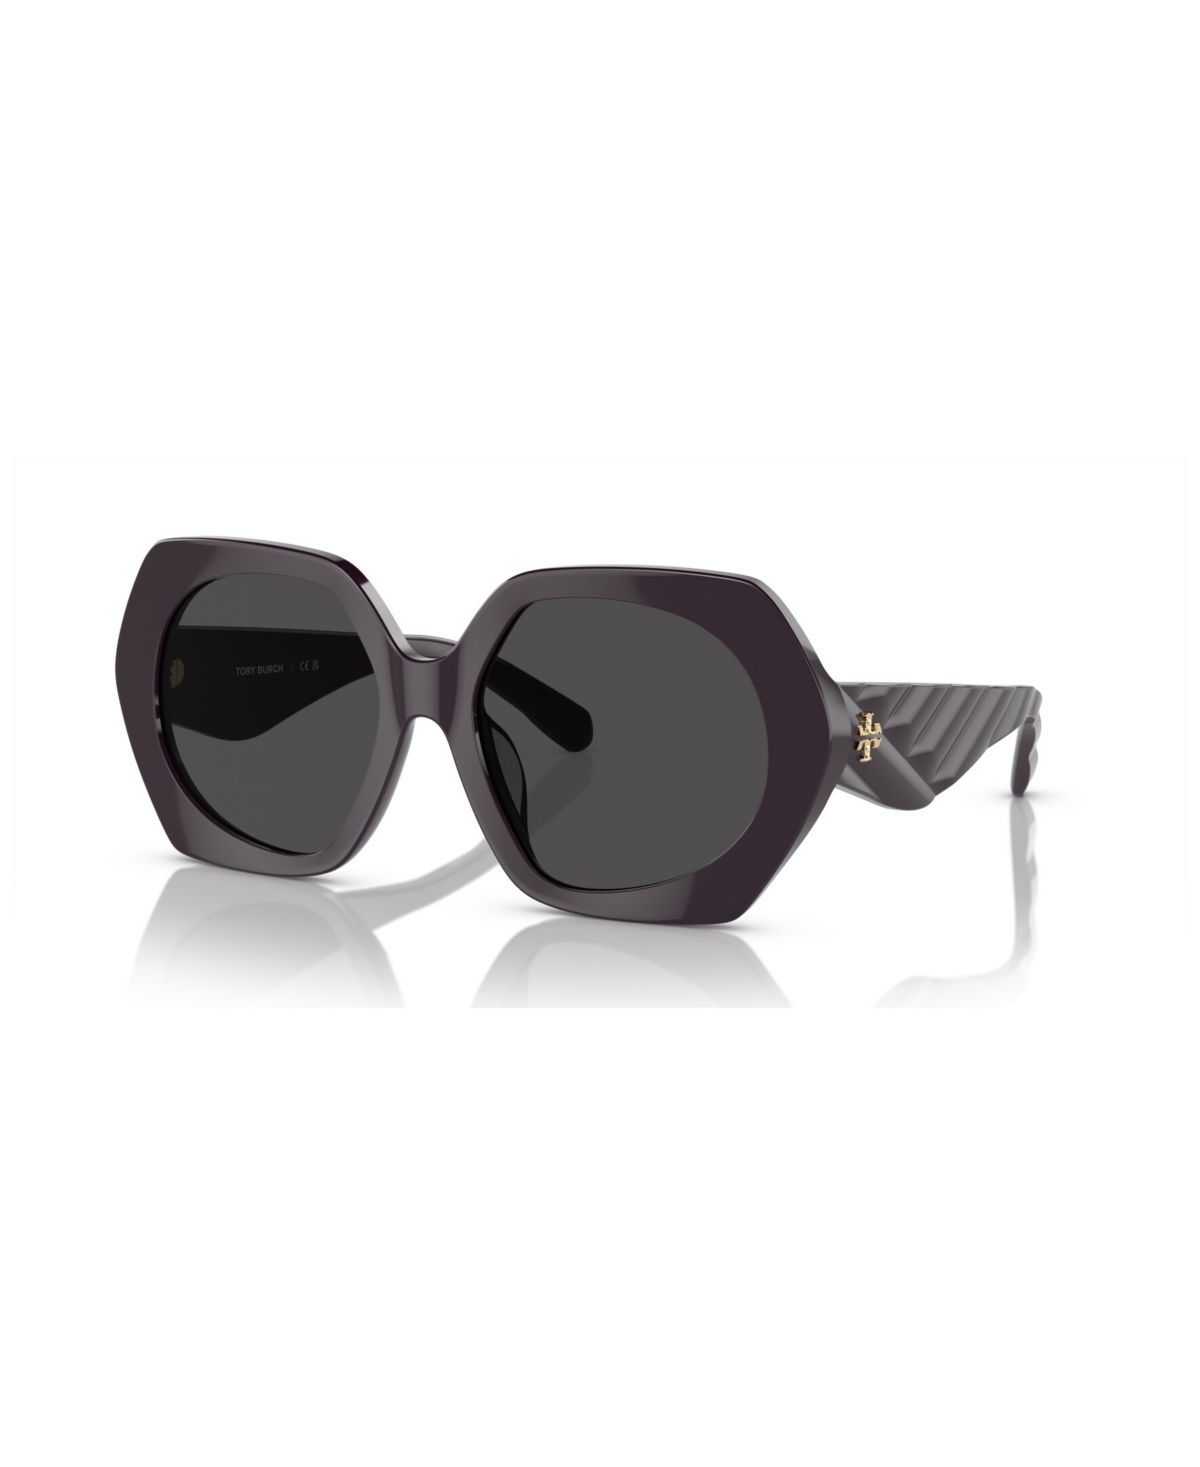 Tory Burch TY7195U Round Sunglasses, 55mm - Black